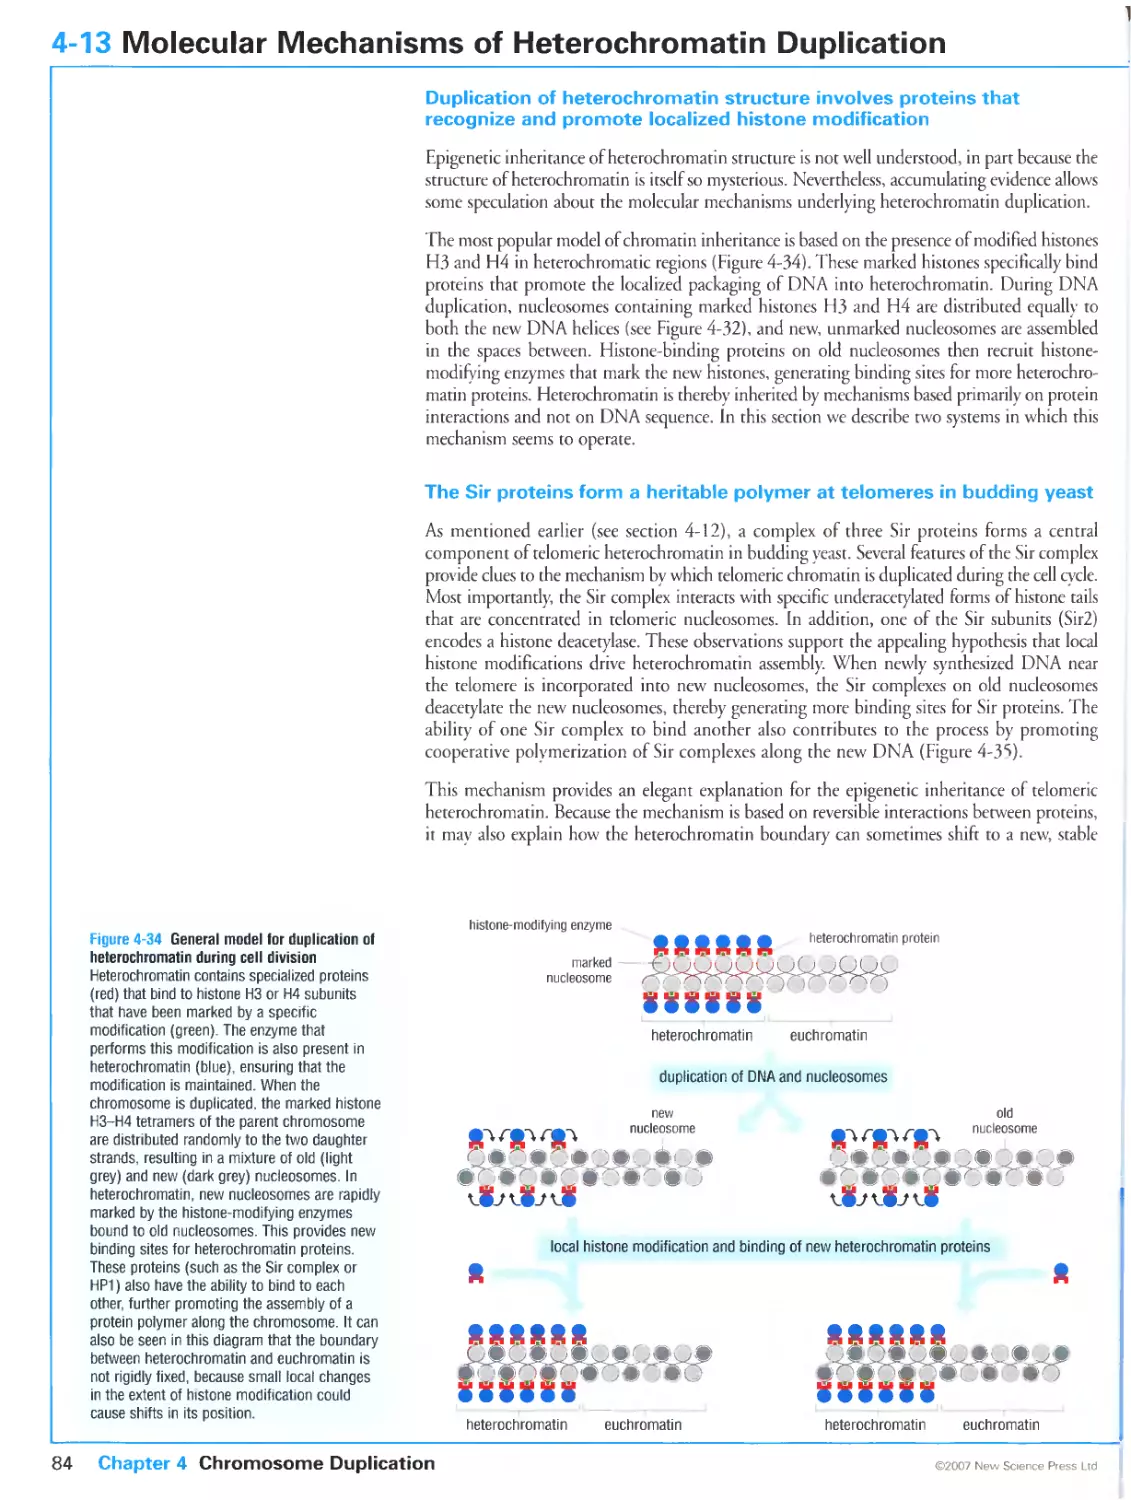 4-13 Molecular Mechanisms of Heterochromatin Duplication